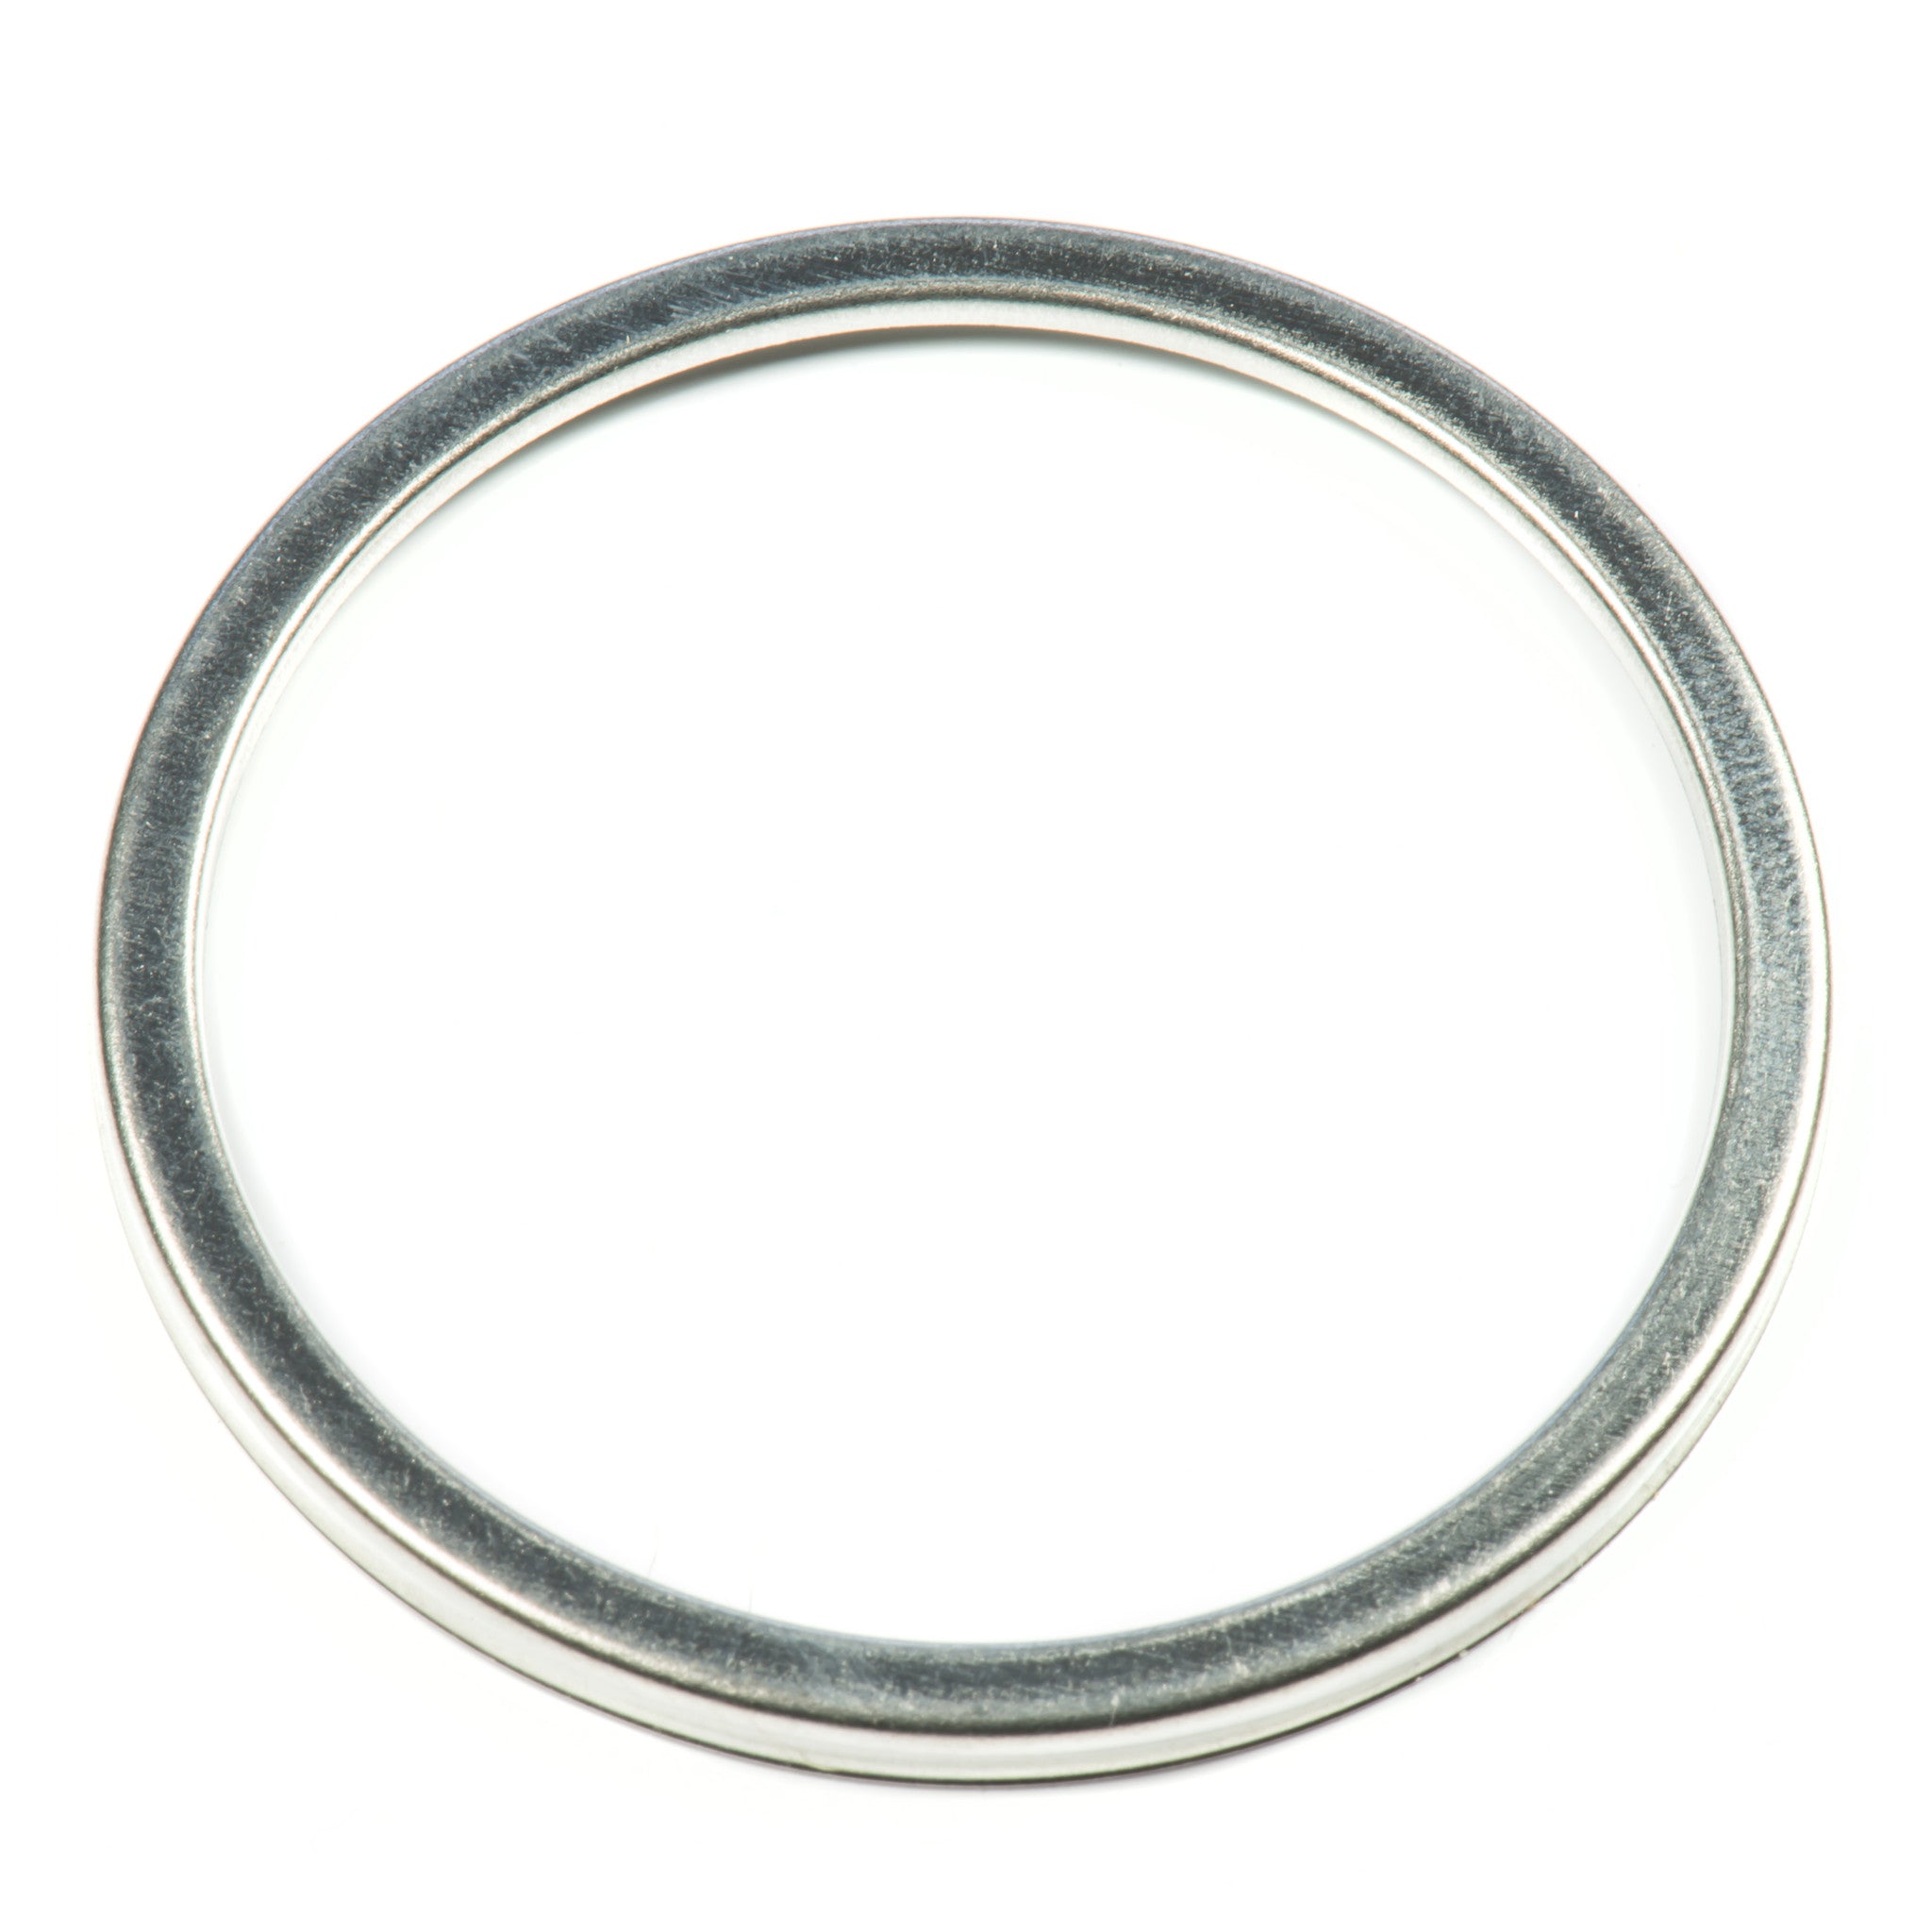 55mm Mirrors Metal Rings - Spares